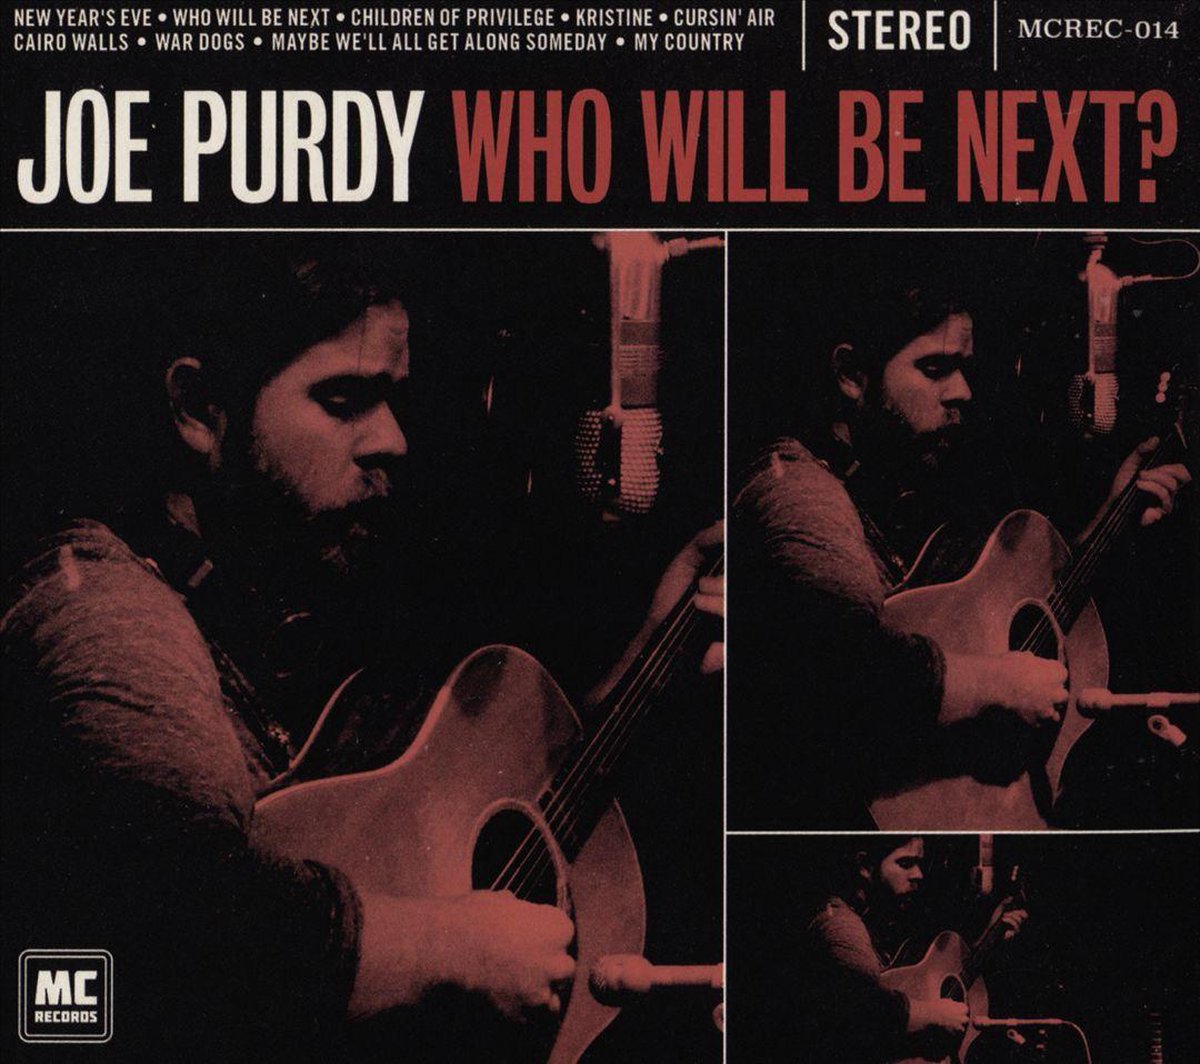 Who Will Be Next? - Joe Purdy